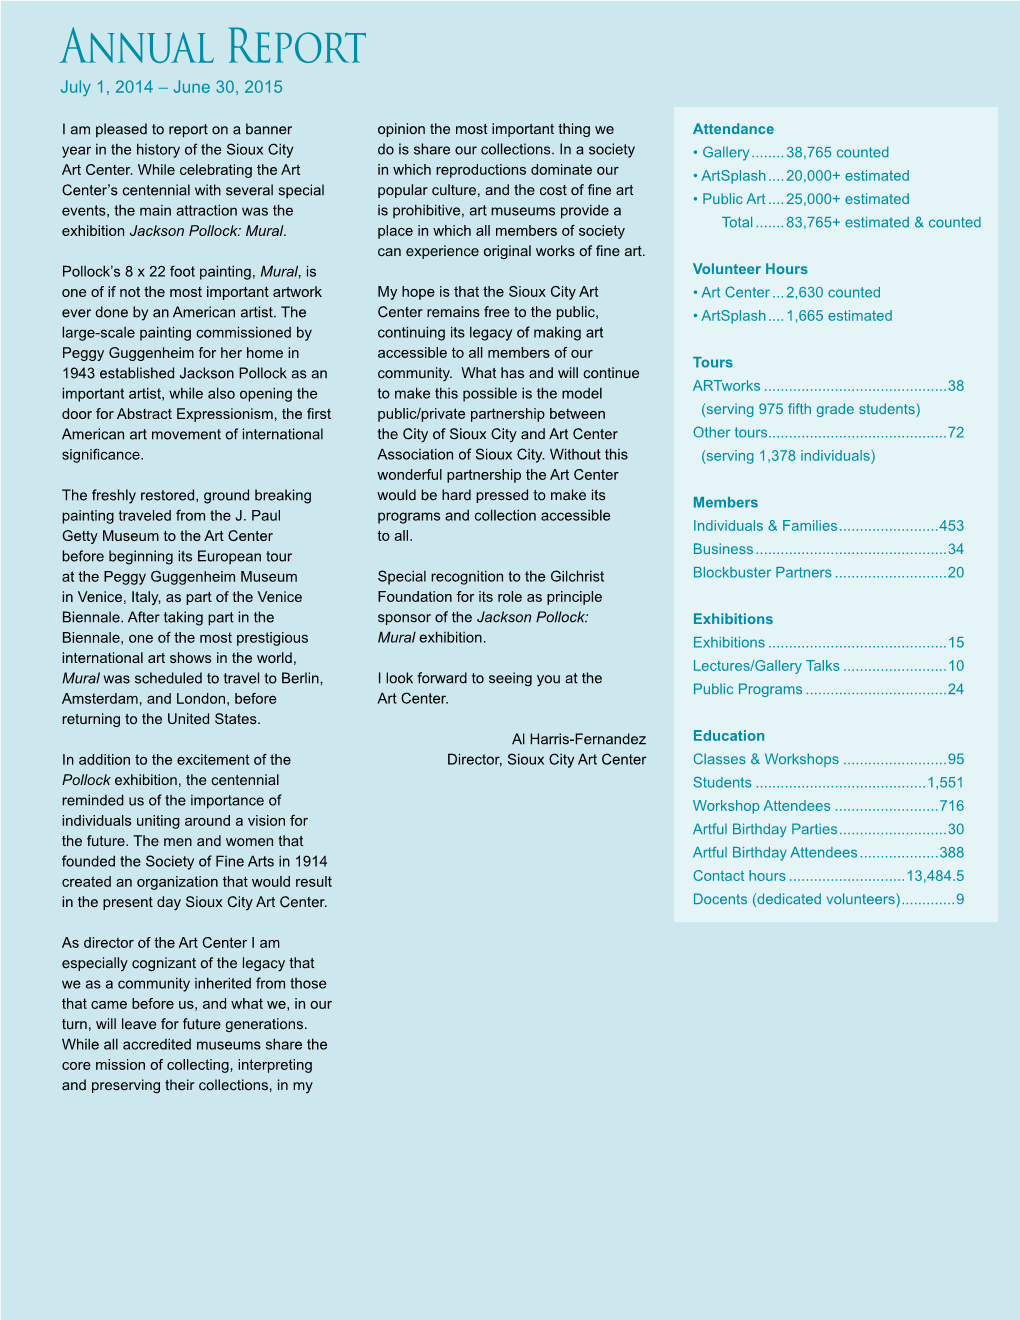 2014 – 2015 Annual Report